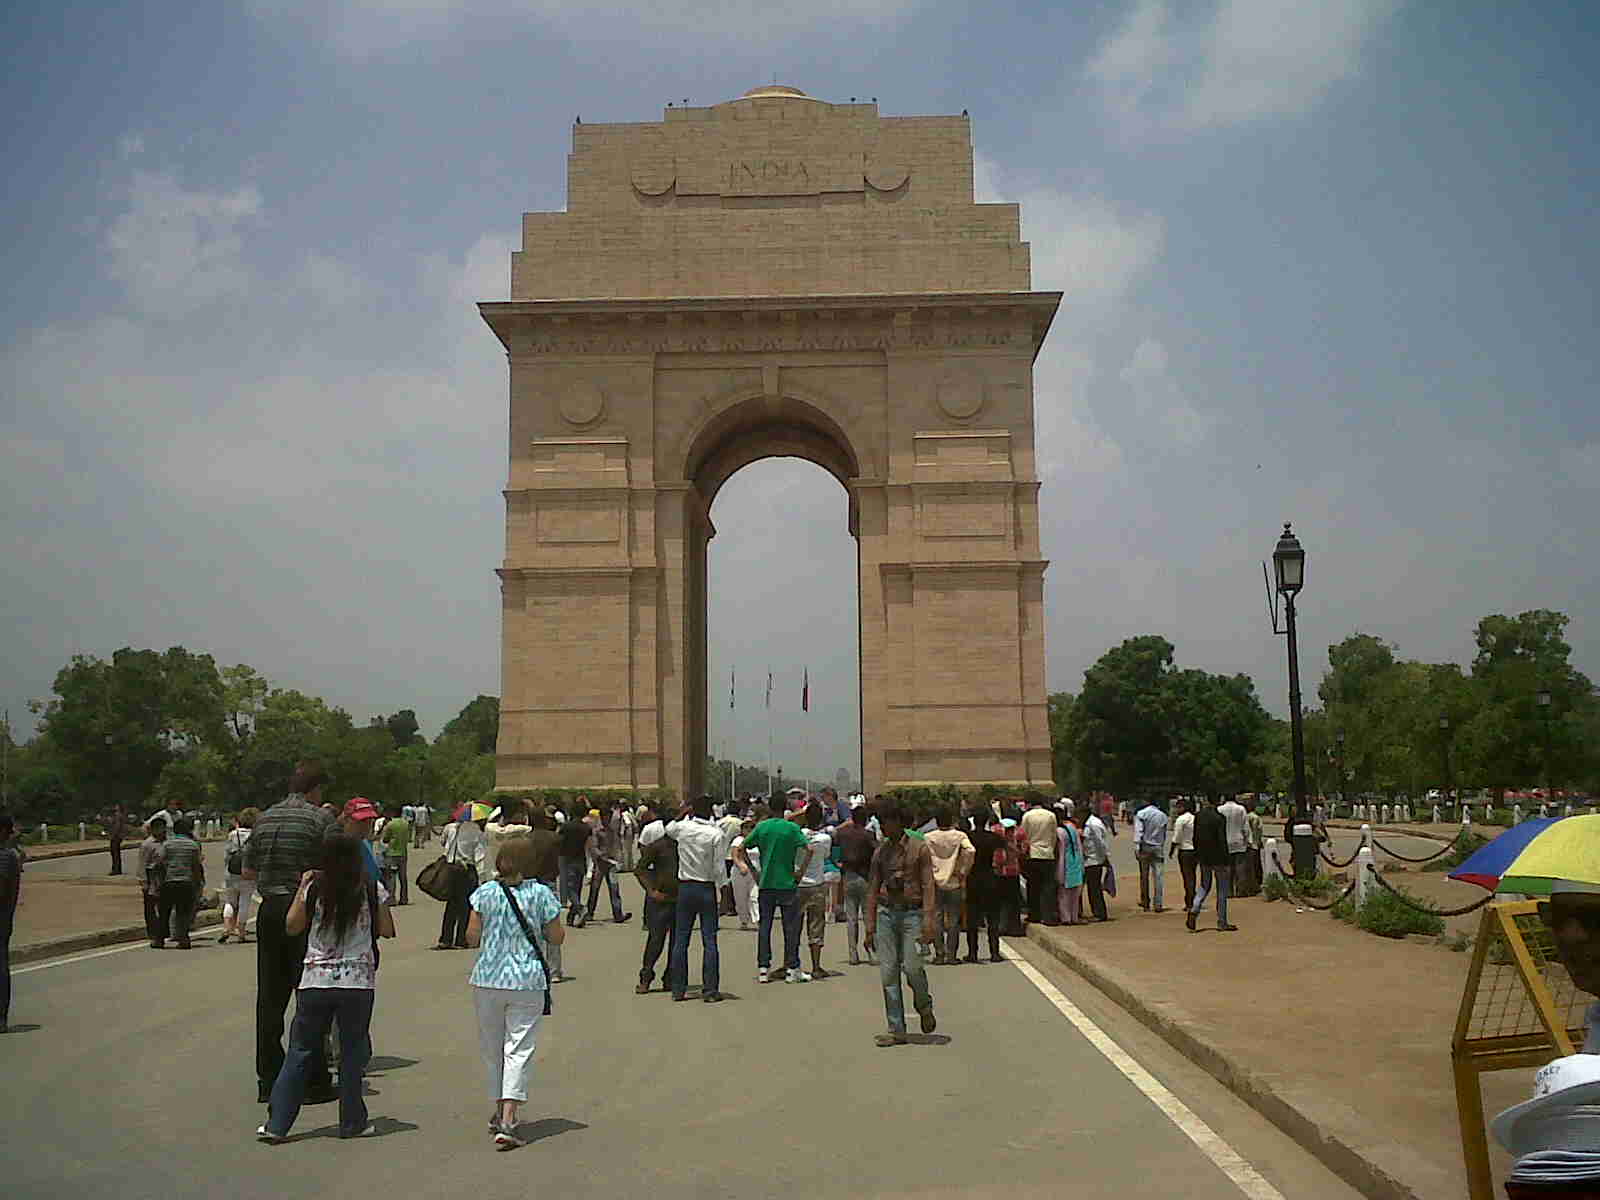 http://4.bp.blogspot.com/-QmIe9-jj75M/TudMiSKghvI/AAAAAAAAGFs/FMPW-vSbydw/s1600/India+Gate++Delhi+Psuperos4.jpg